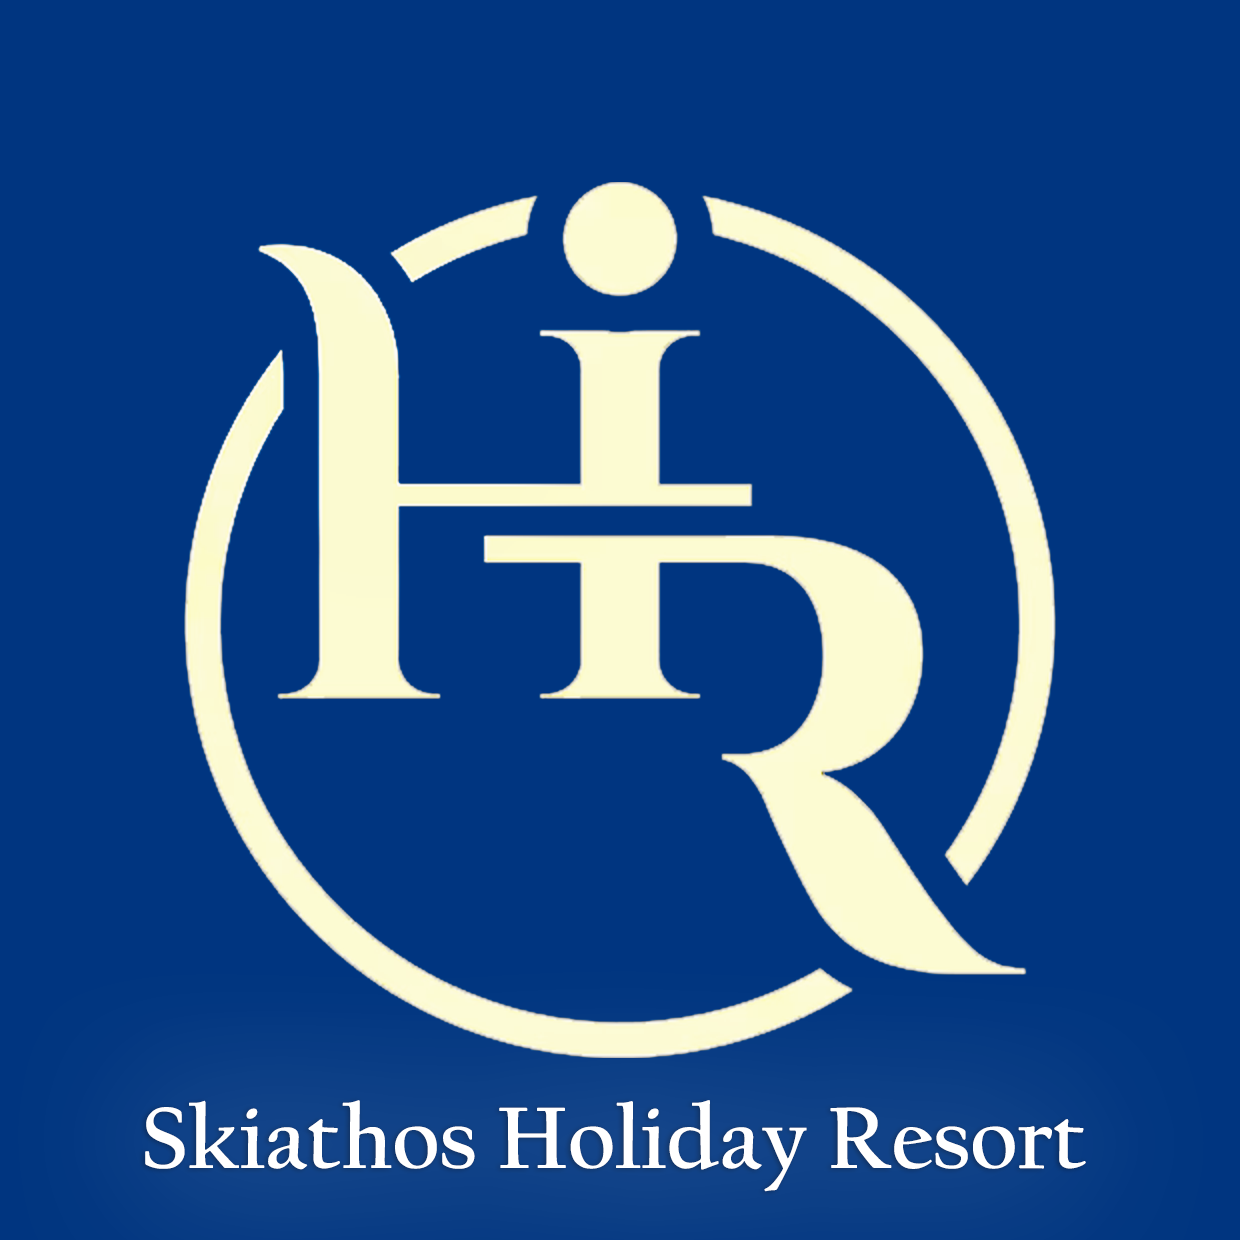 Skiathos Holiday Resort | Cart - Skiathos Holiday Resort